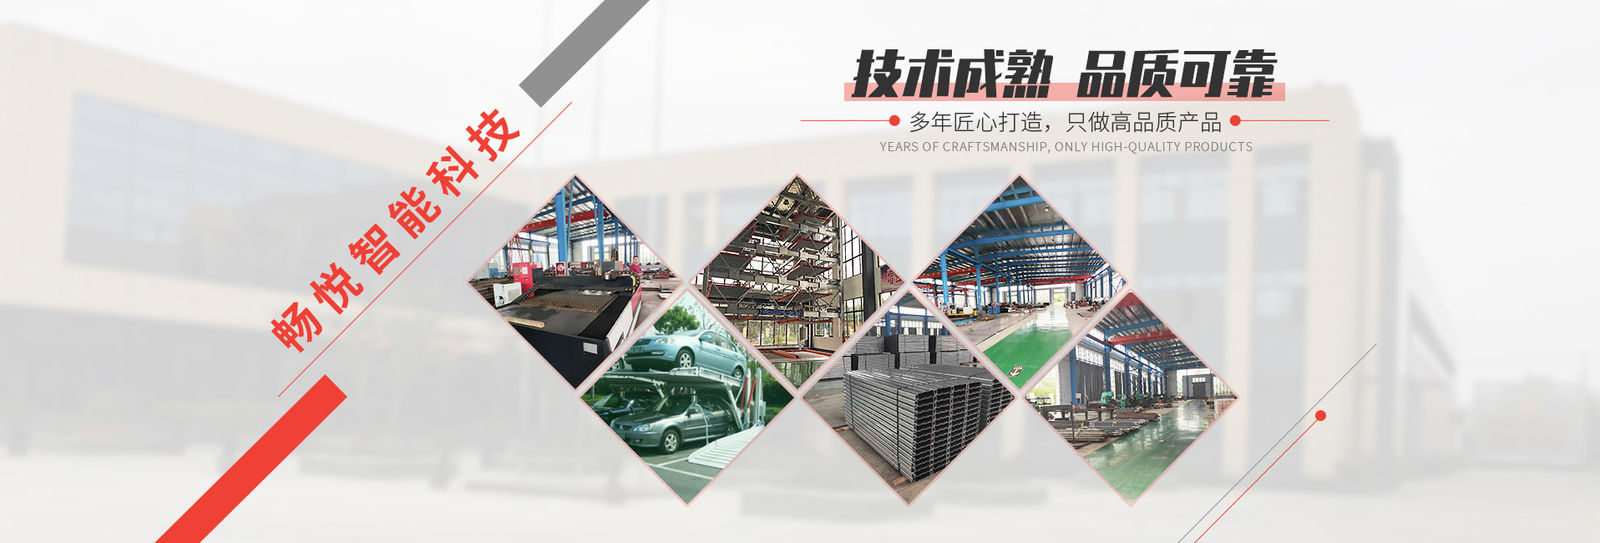 الصين Shanghai Changyue Automation Machinery Co., Ltd. ملف الشركة